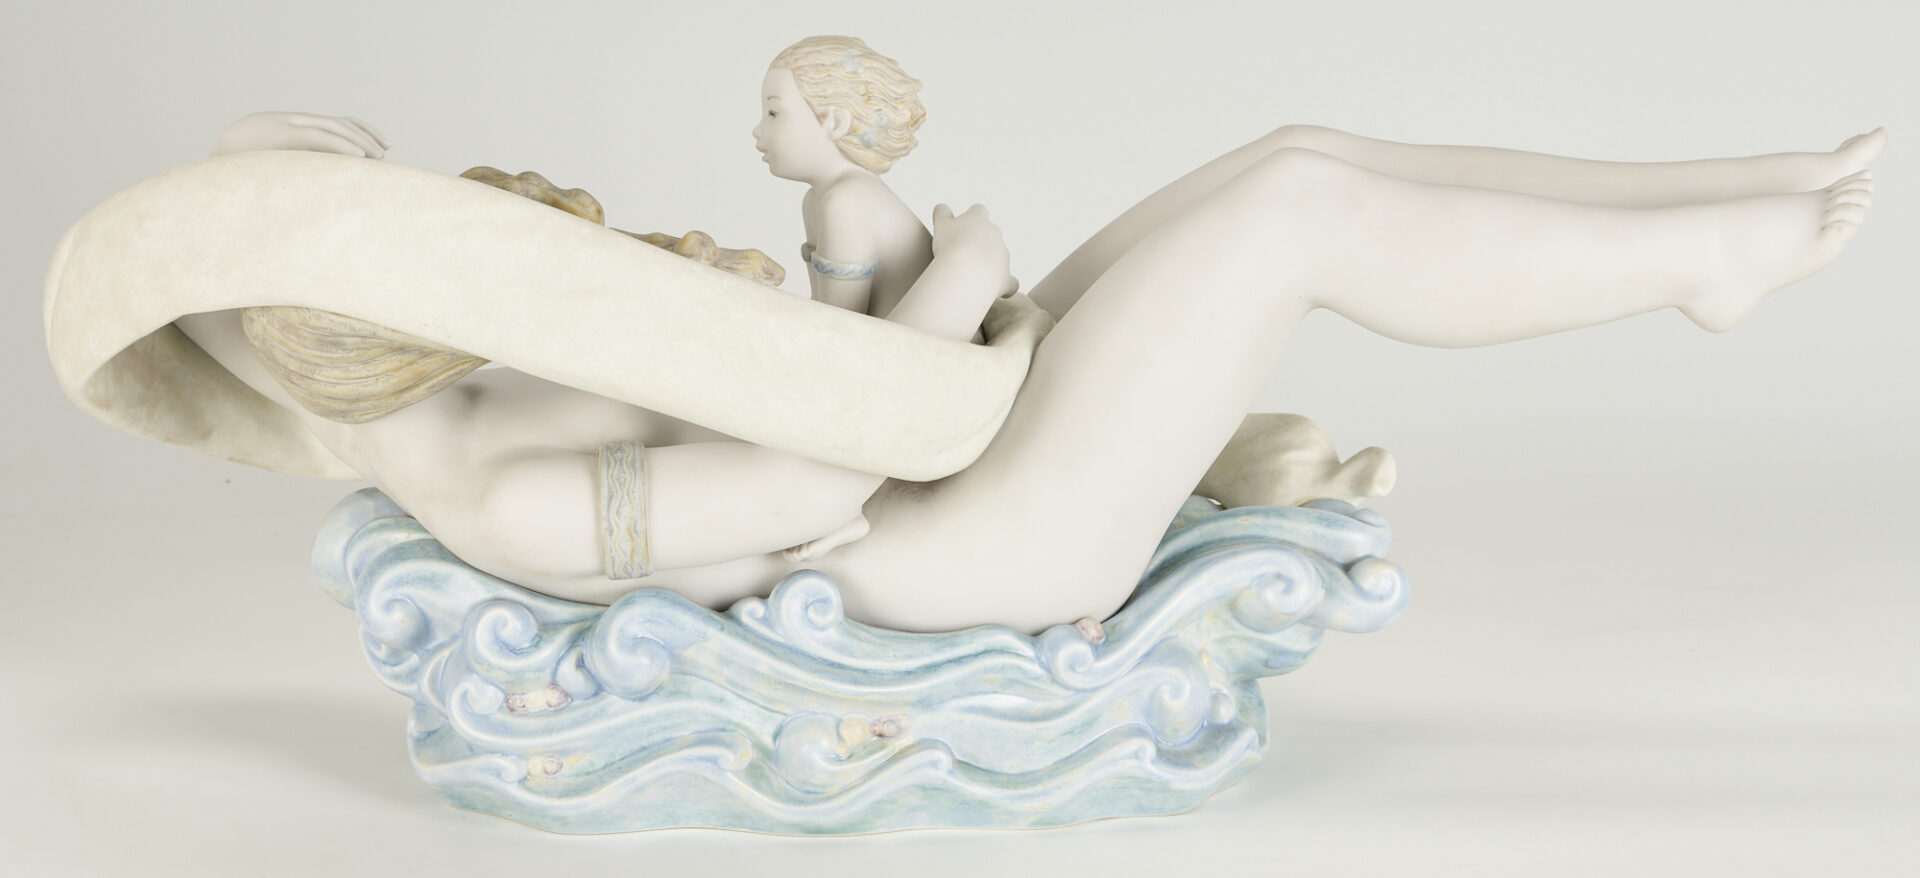 Lot 52: Lladro Porcelain Sculpture, The Flow of Life